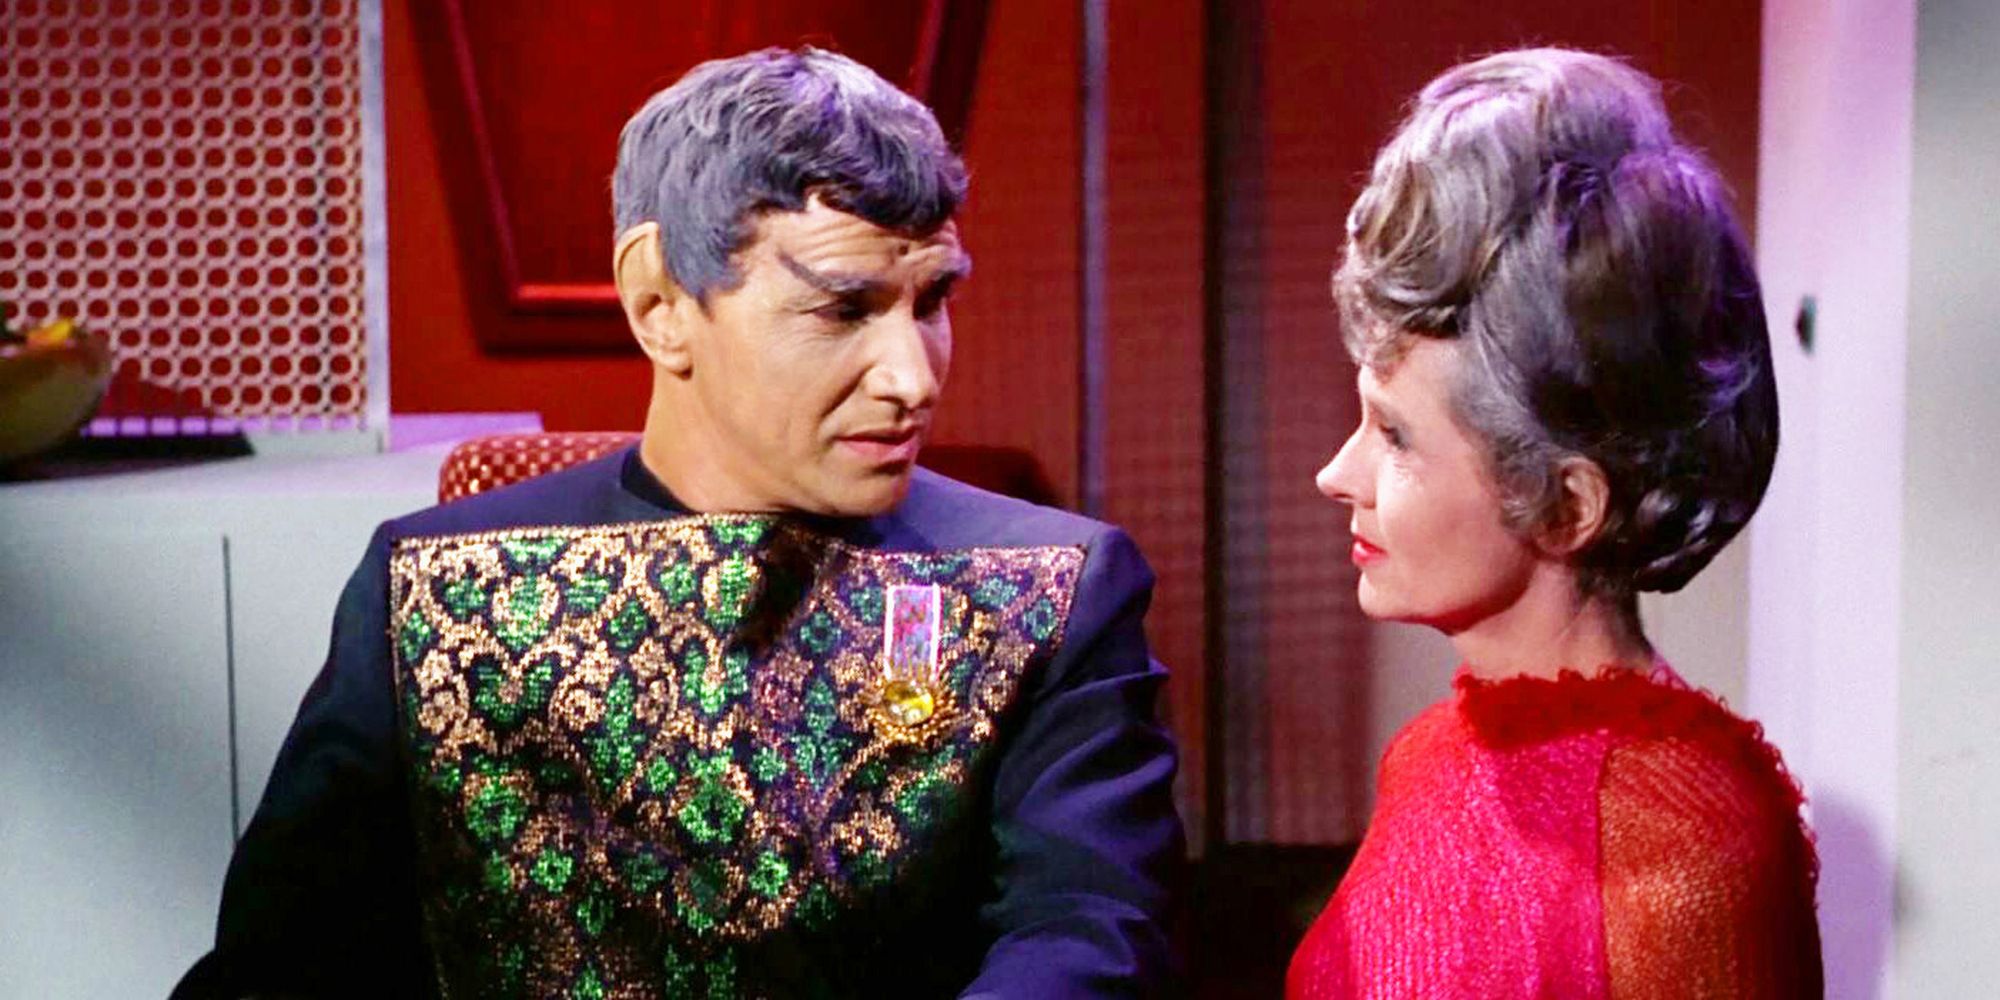 Sarek speaks to Amanda in Star Trek